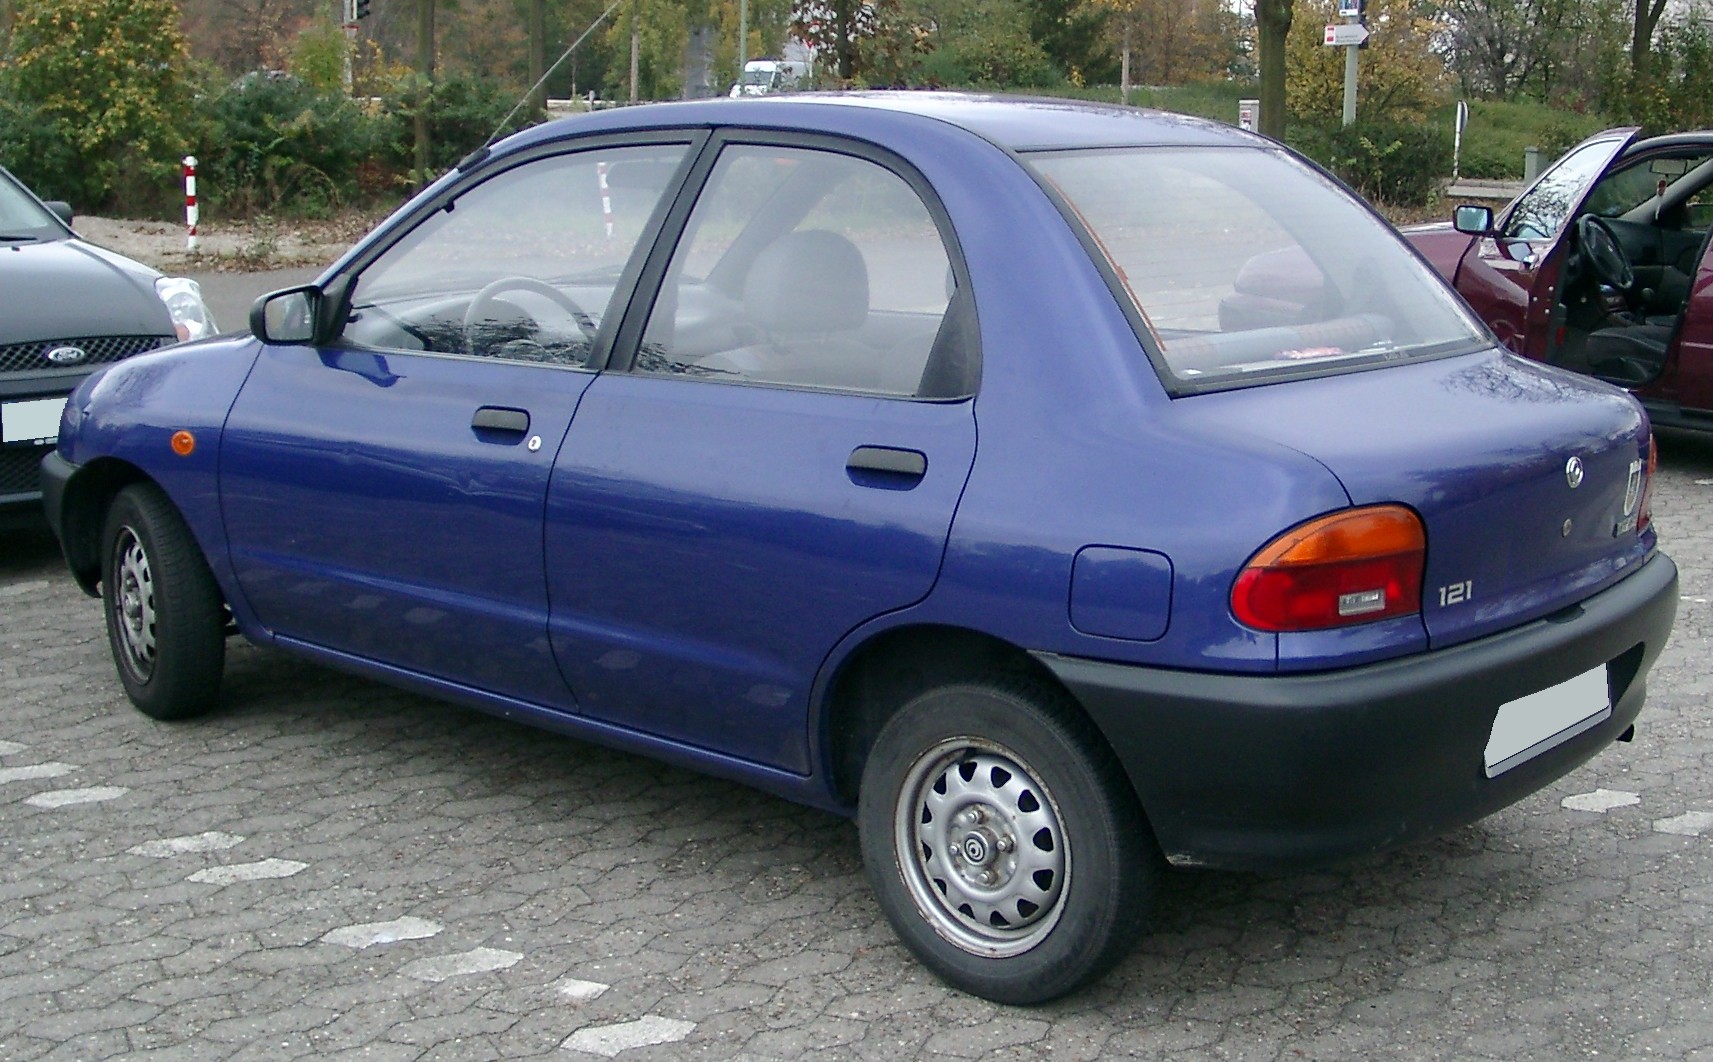 Dossier: Mazda 121 arrière 20071025.jpg - Wikimedia Commons